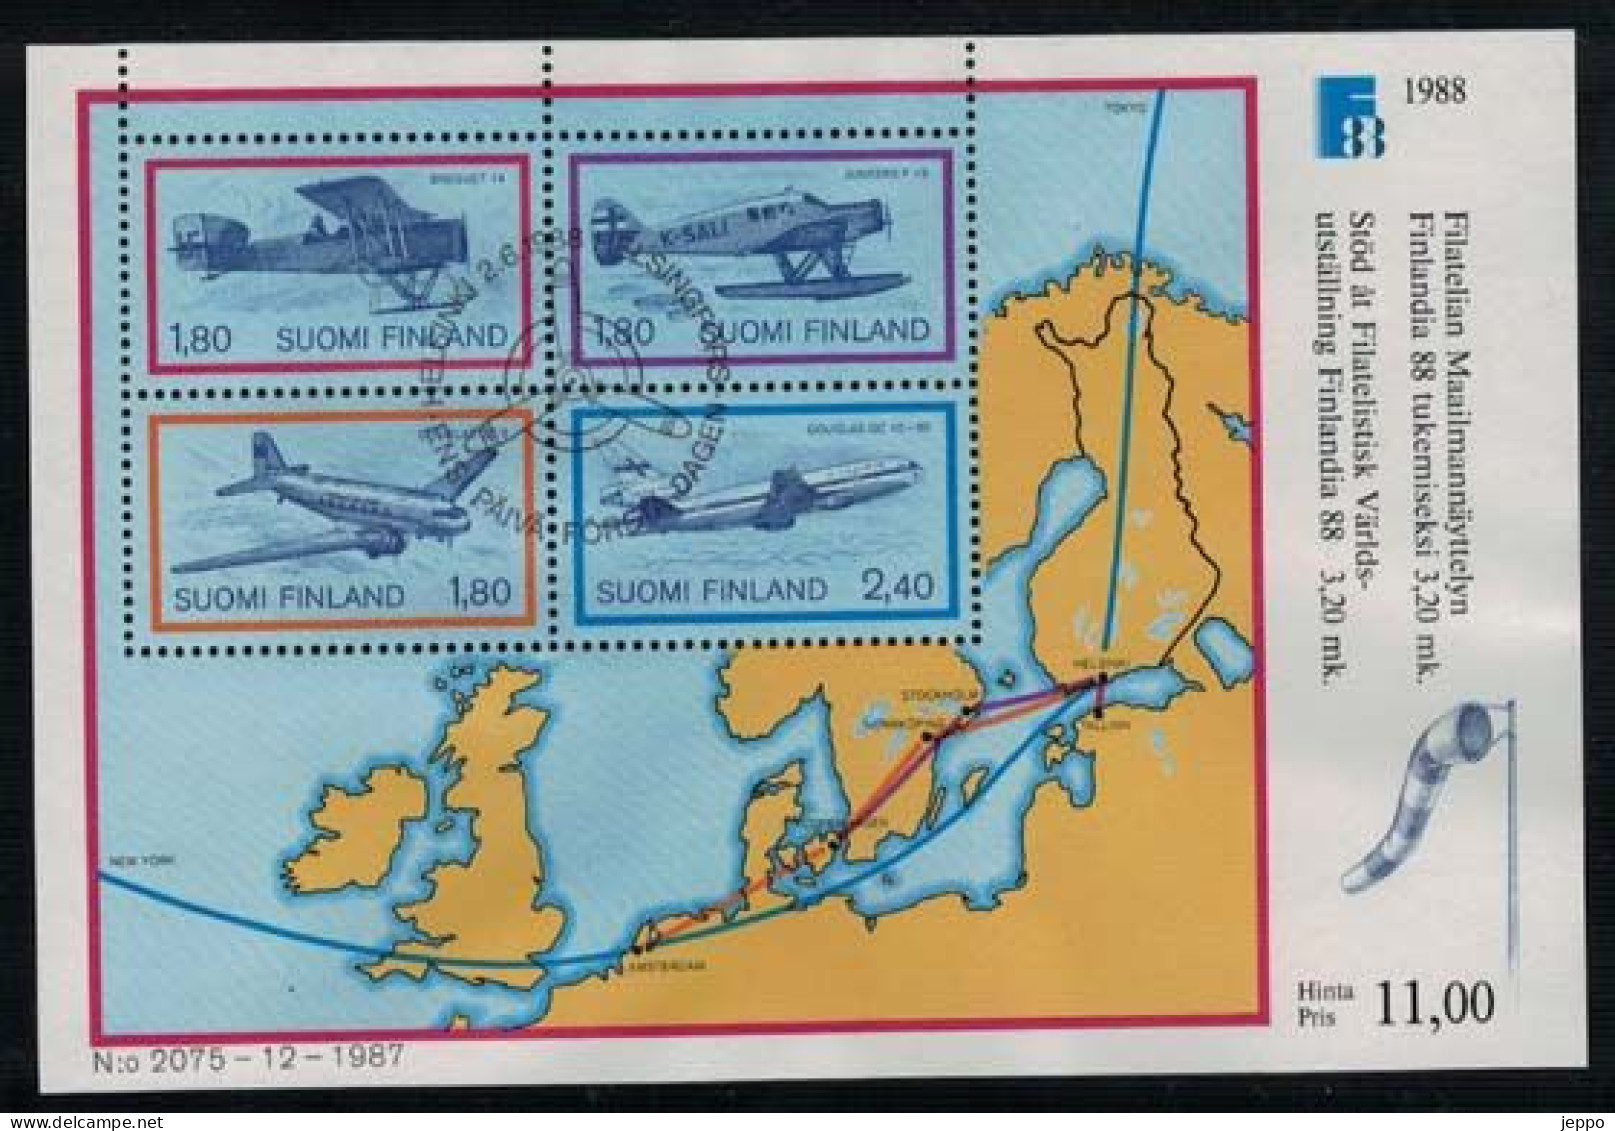 1988 Finland Michel Bl 4, Finlandia 88 Aeroplanes, FD Stamped. - Blokken & Velletjes